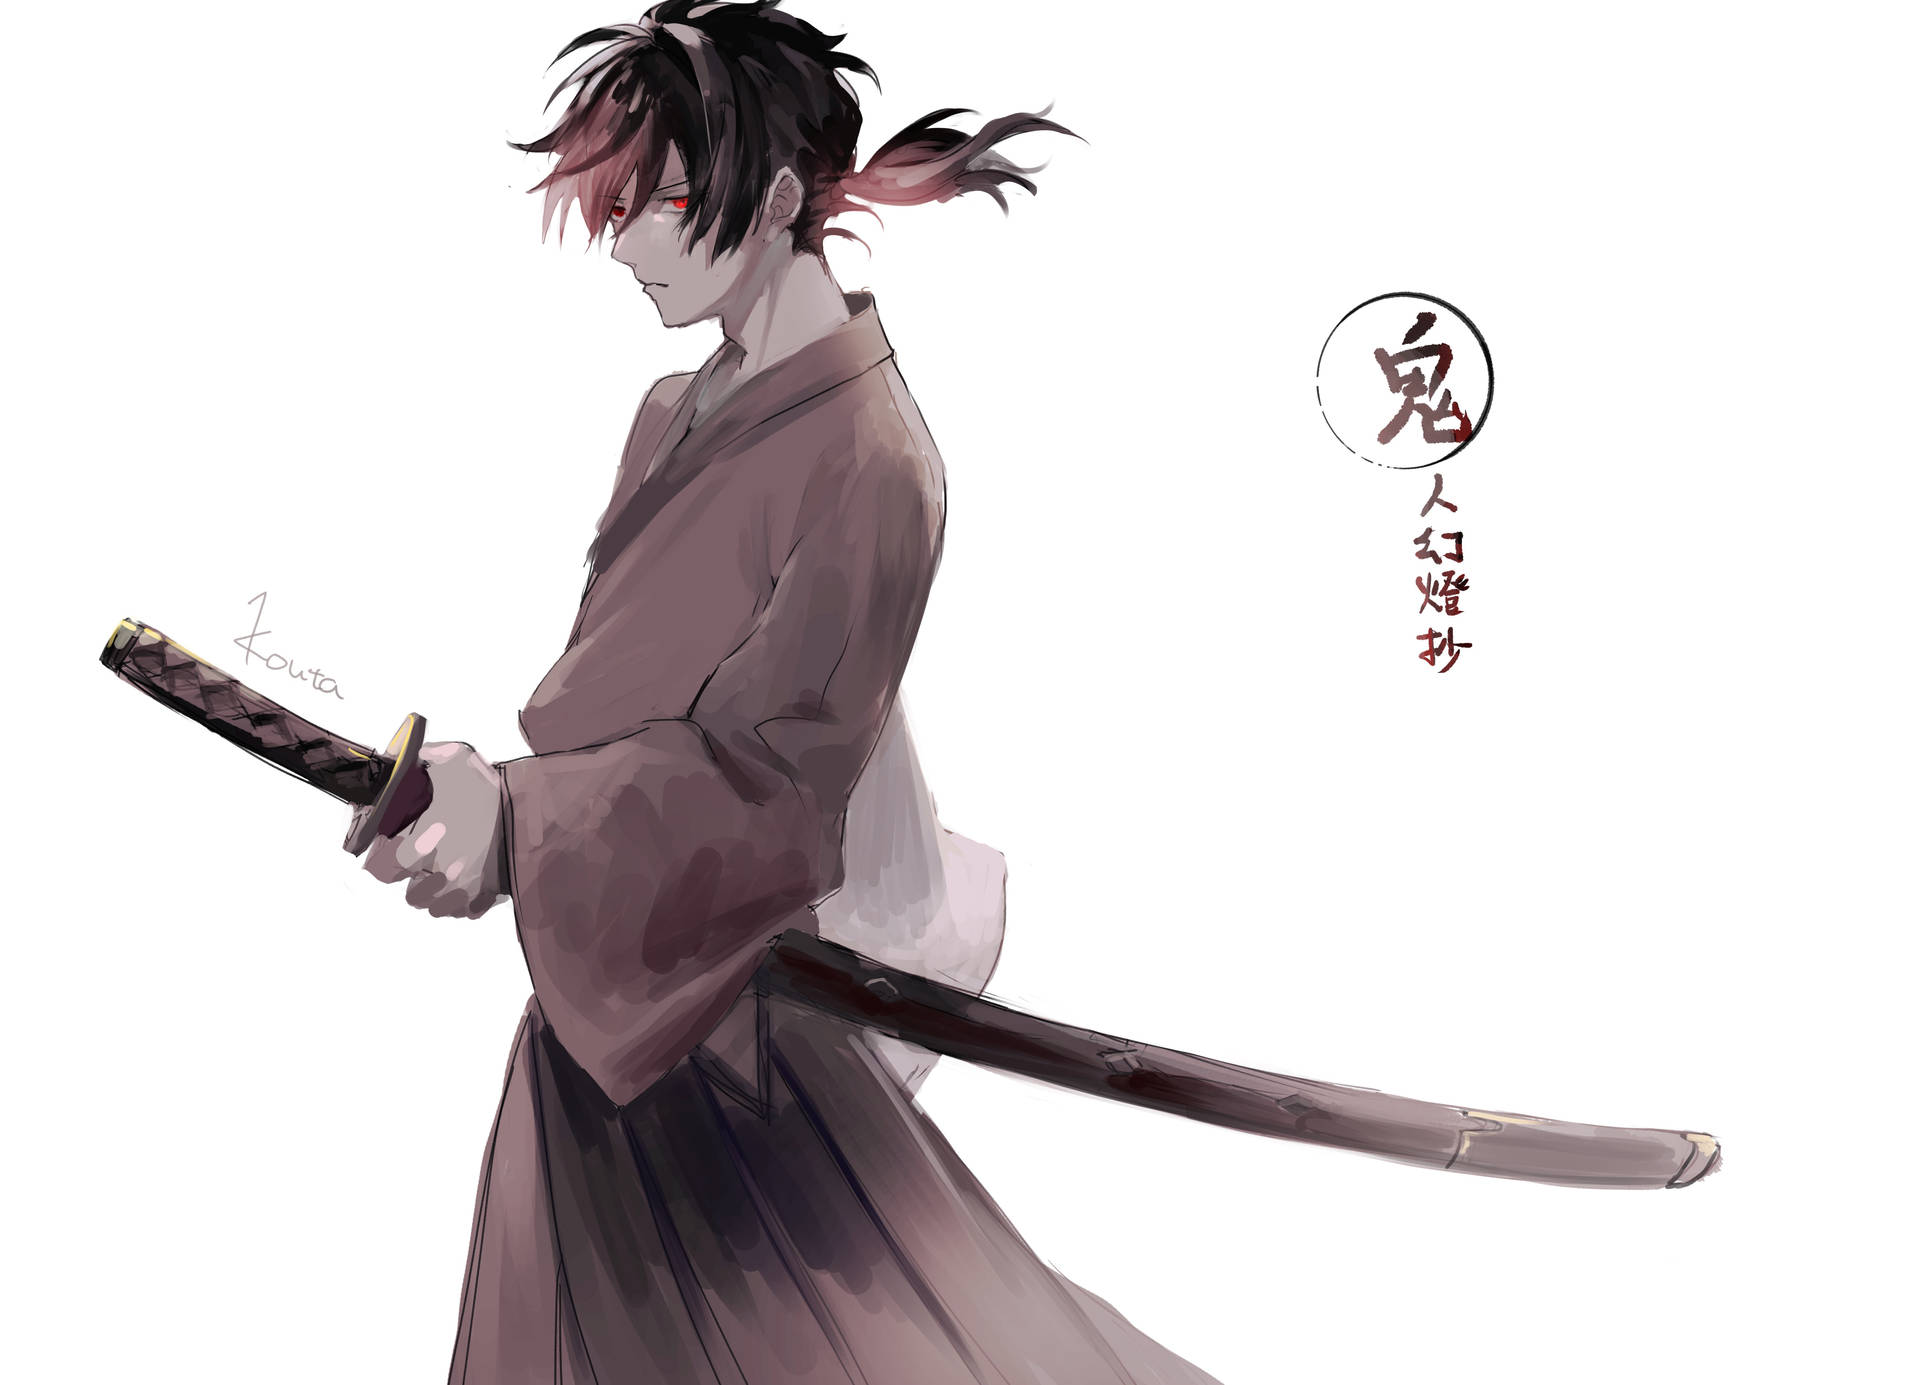 Anime Samurai Sword Wallpaper